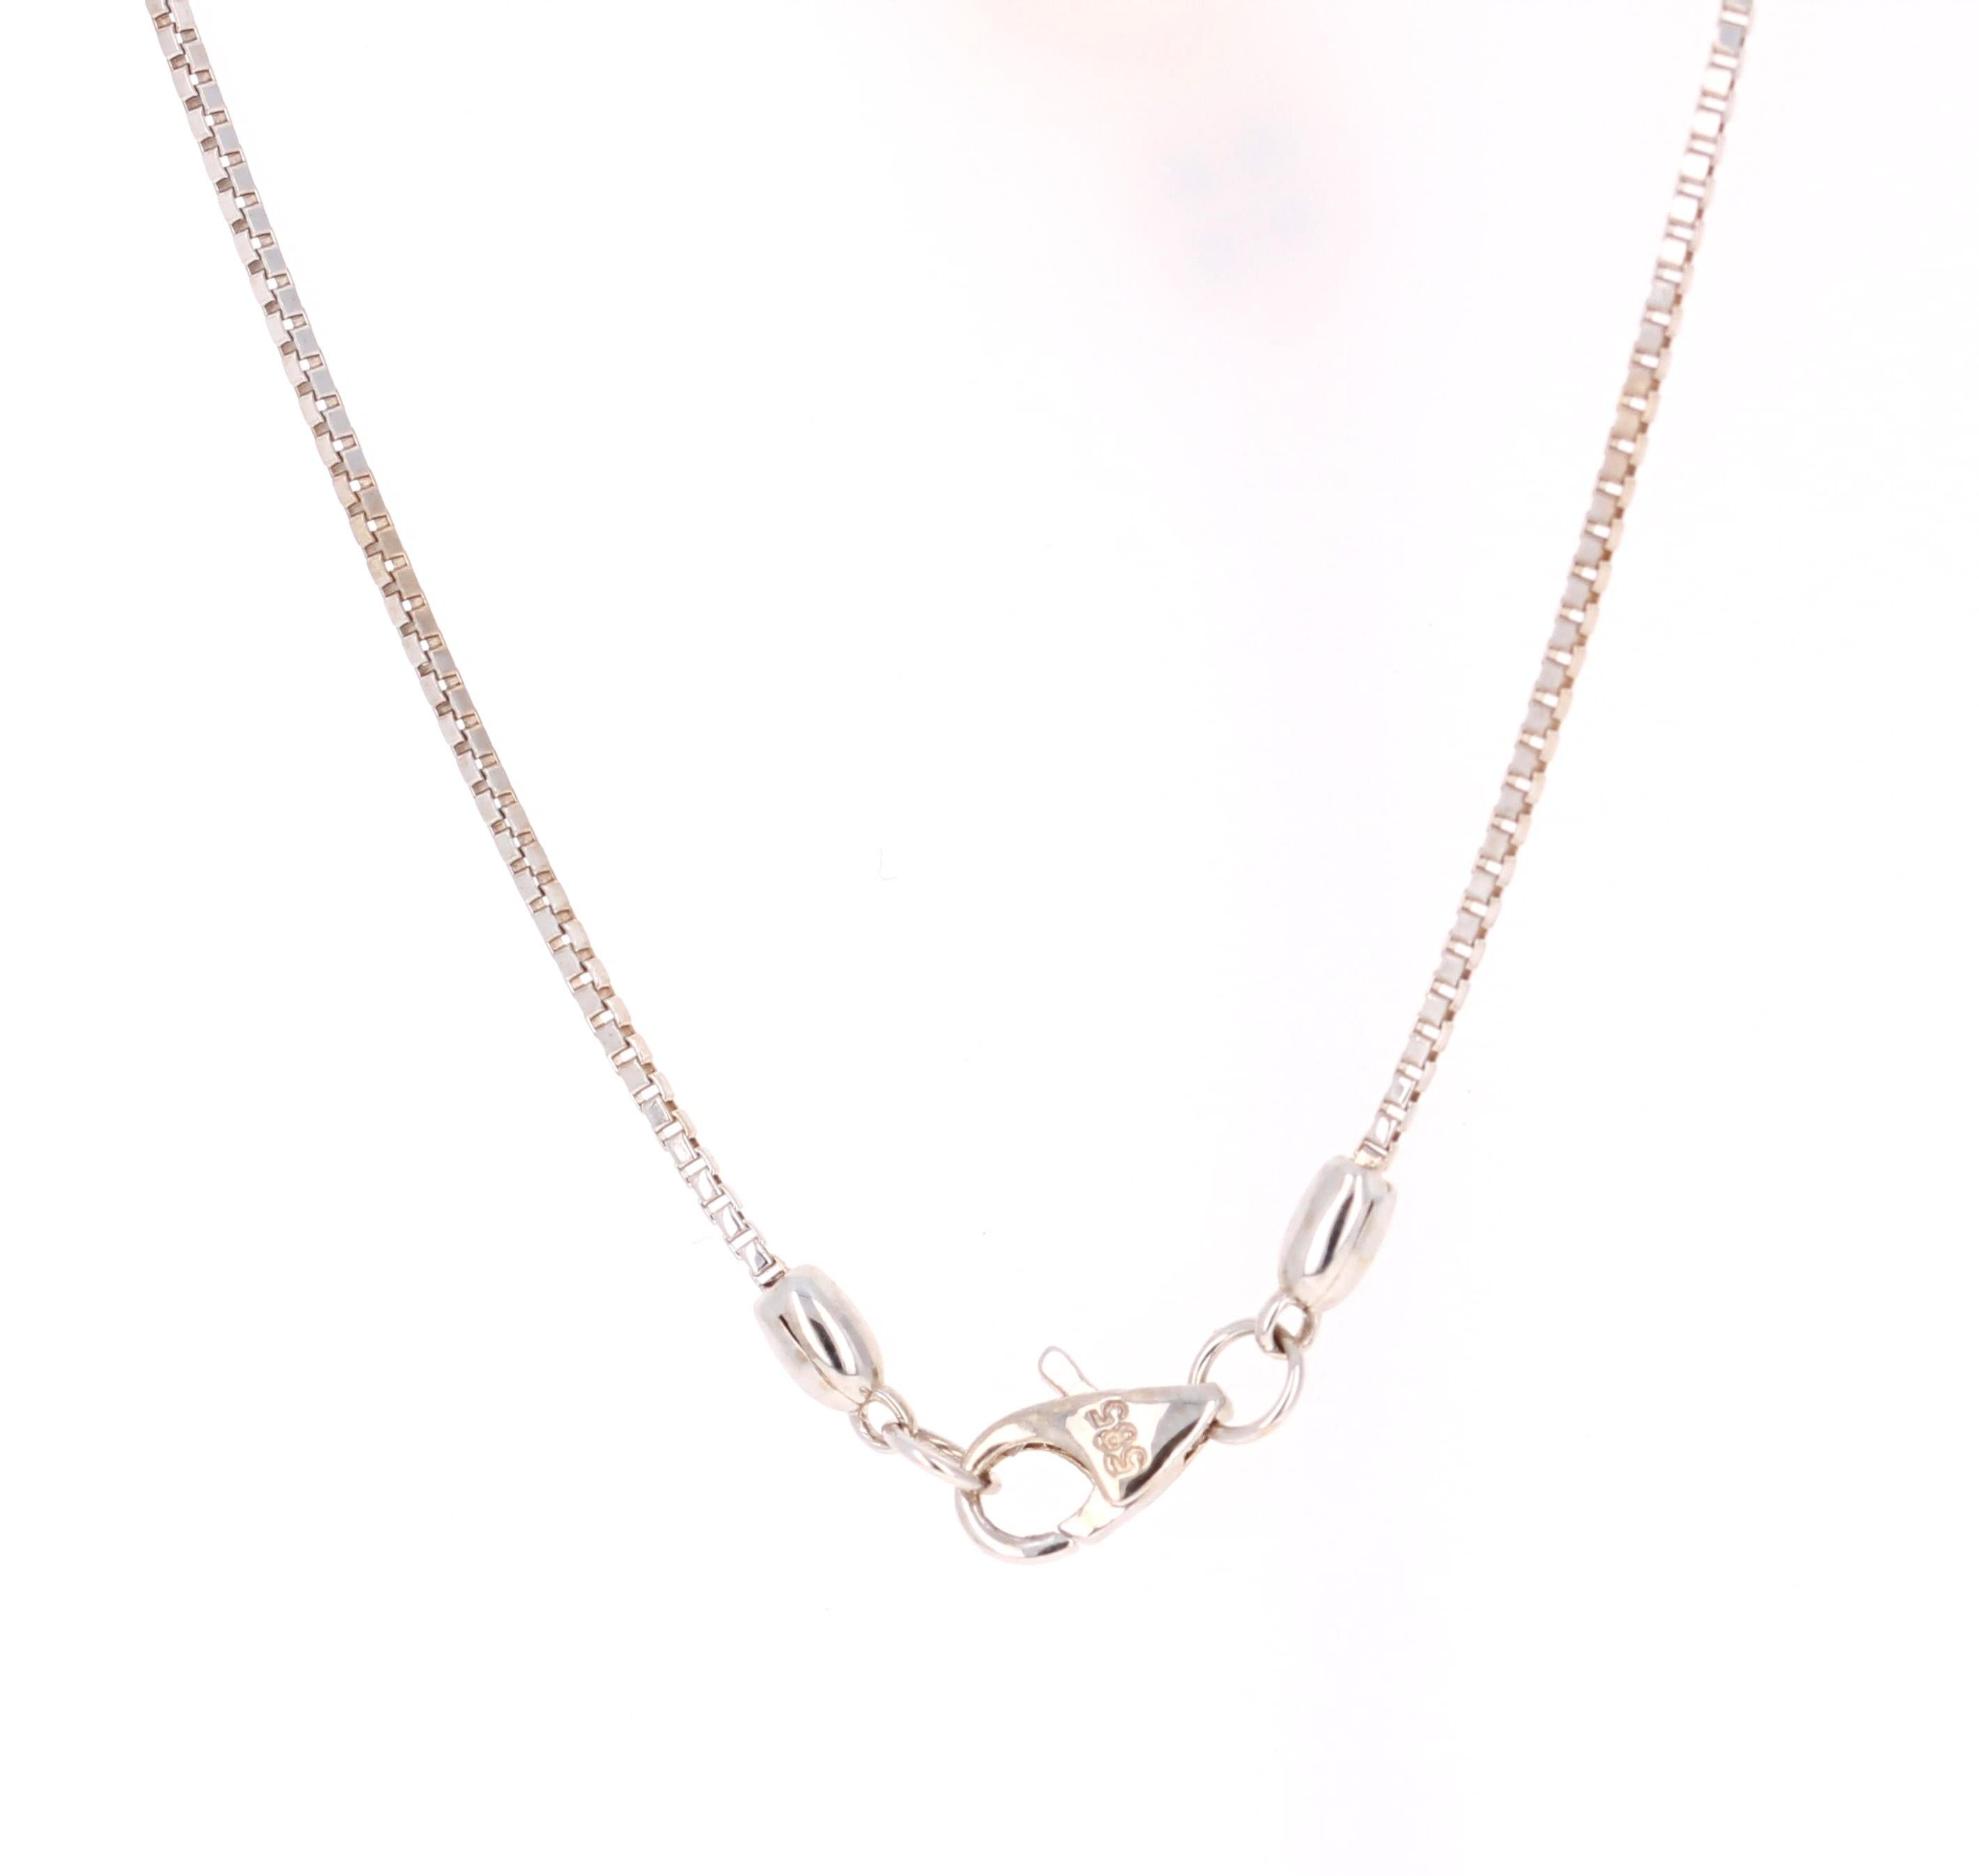 Round Cut 0.37 Carat Diamond Lariat Style Necklace in 14 Karat White Gold For Sale